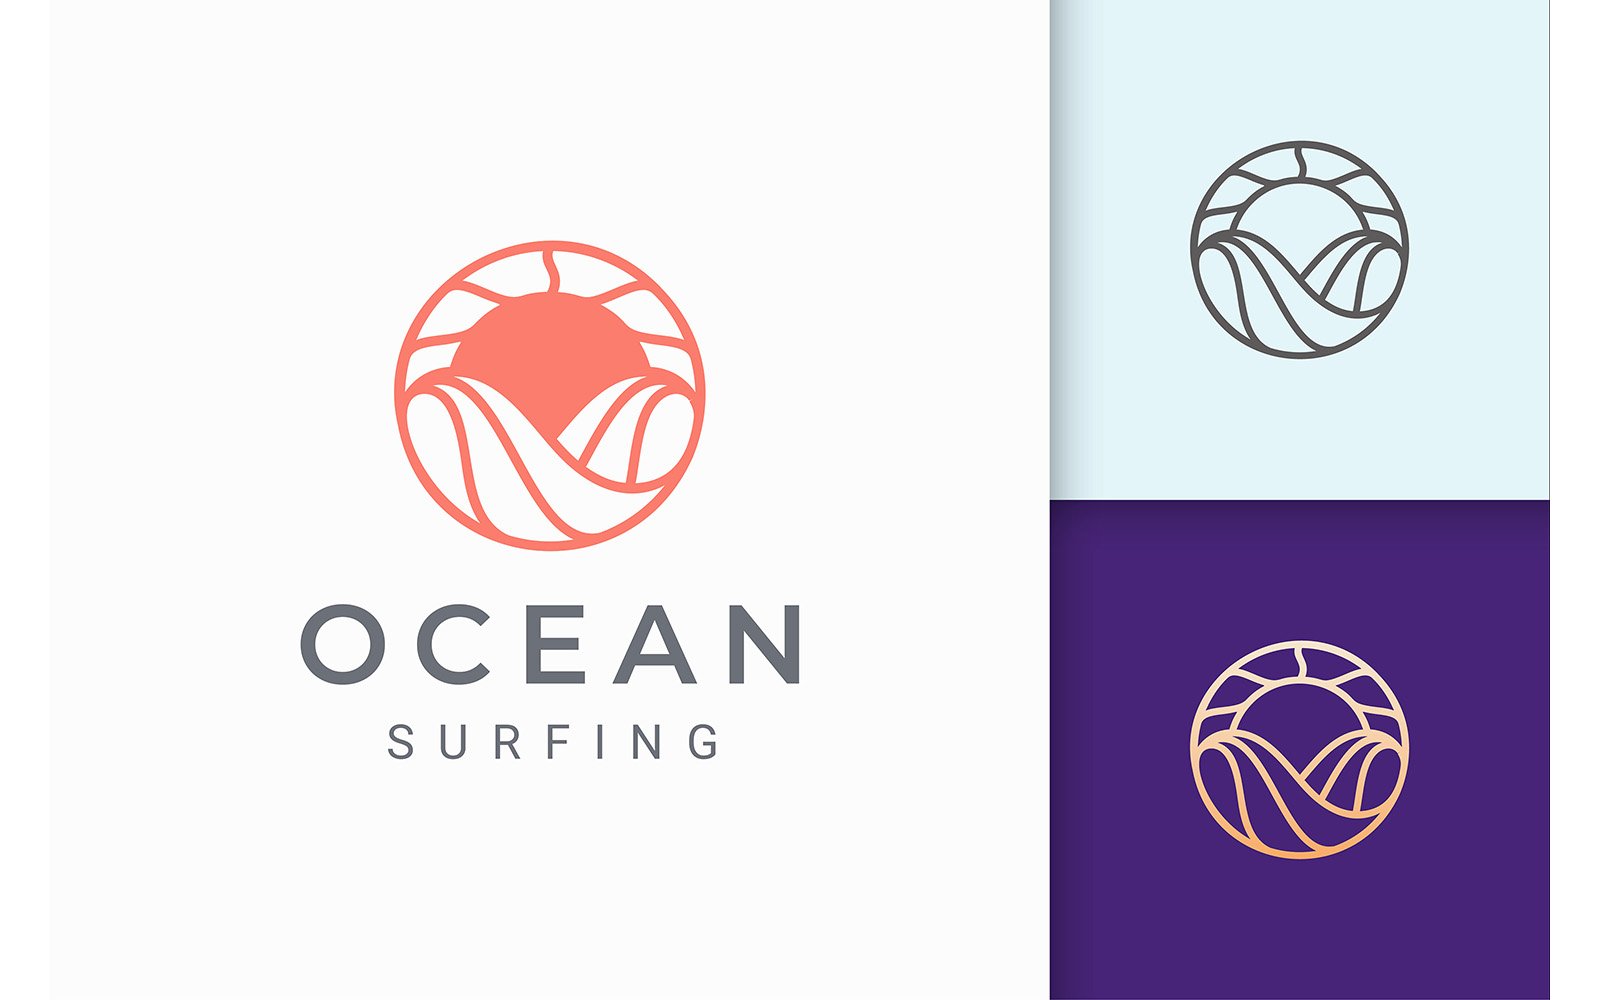 Simple Sun and Ocean Logo Template